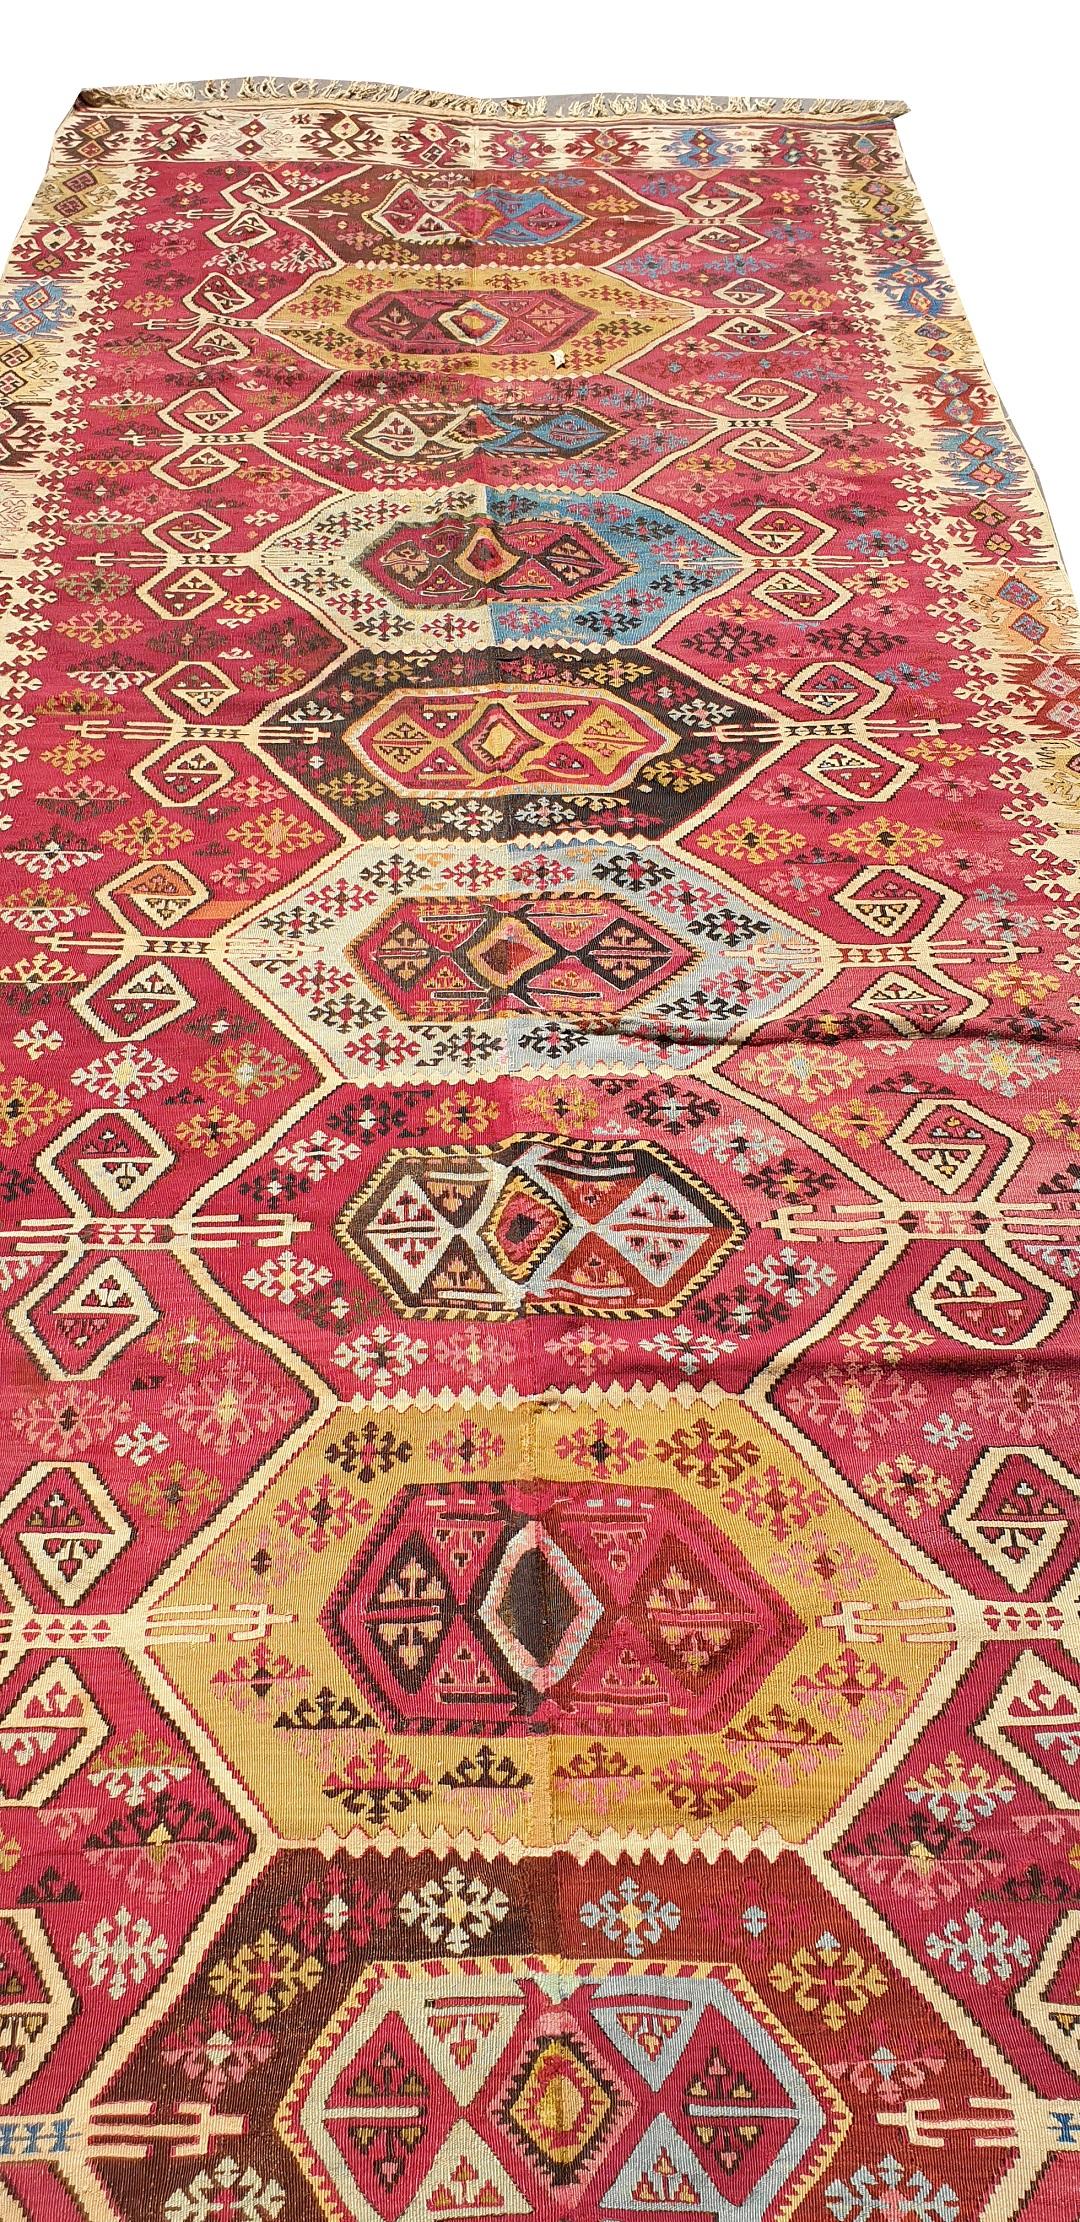 Late 19th Century 757 - 19th Century Turkish Kilim Carpet For Sale